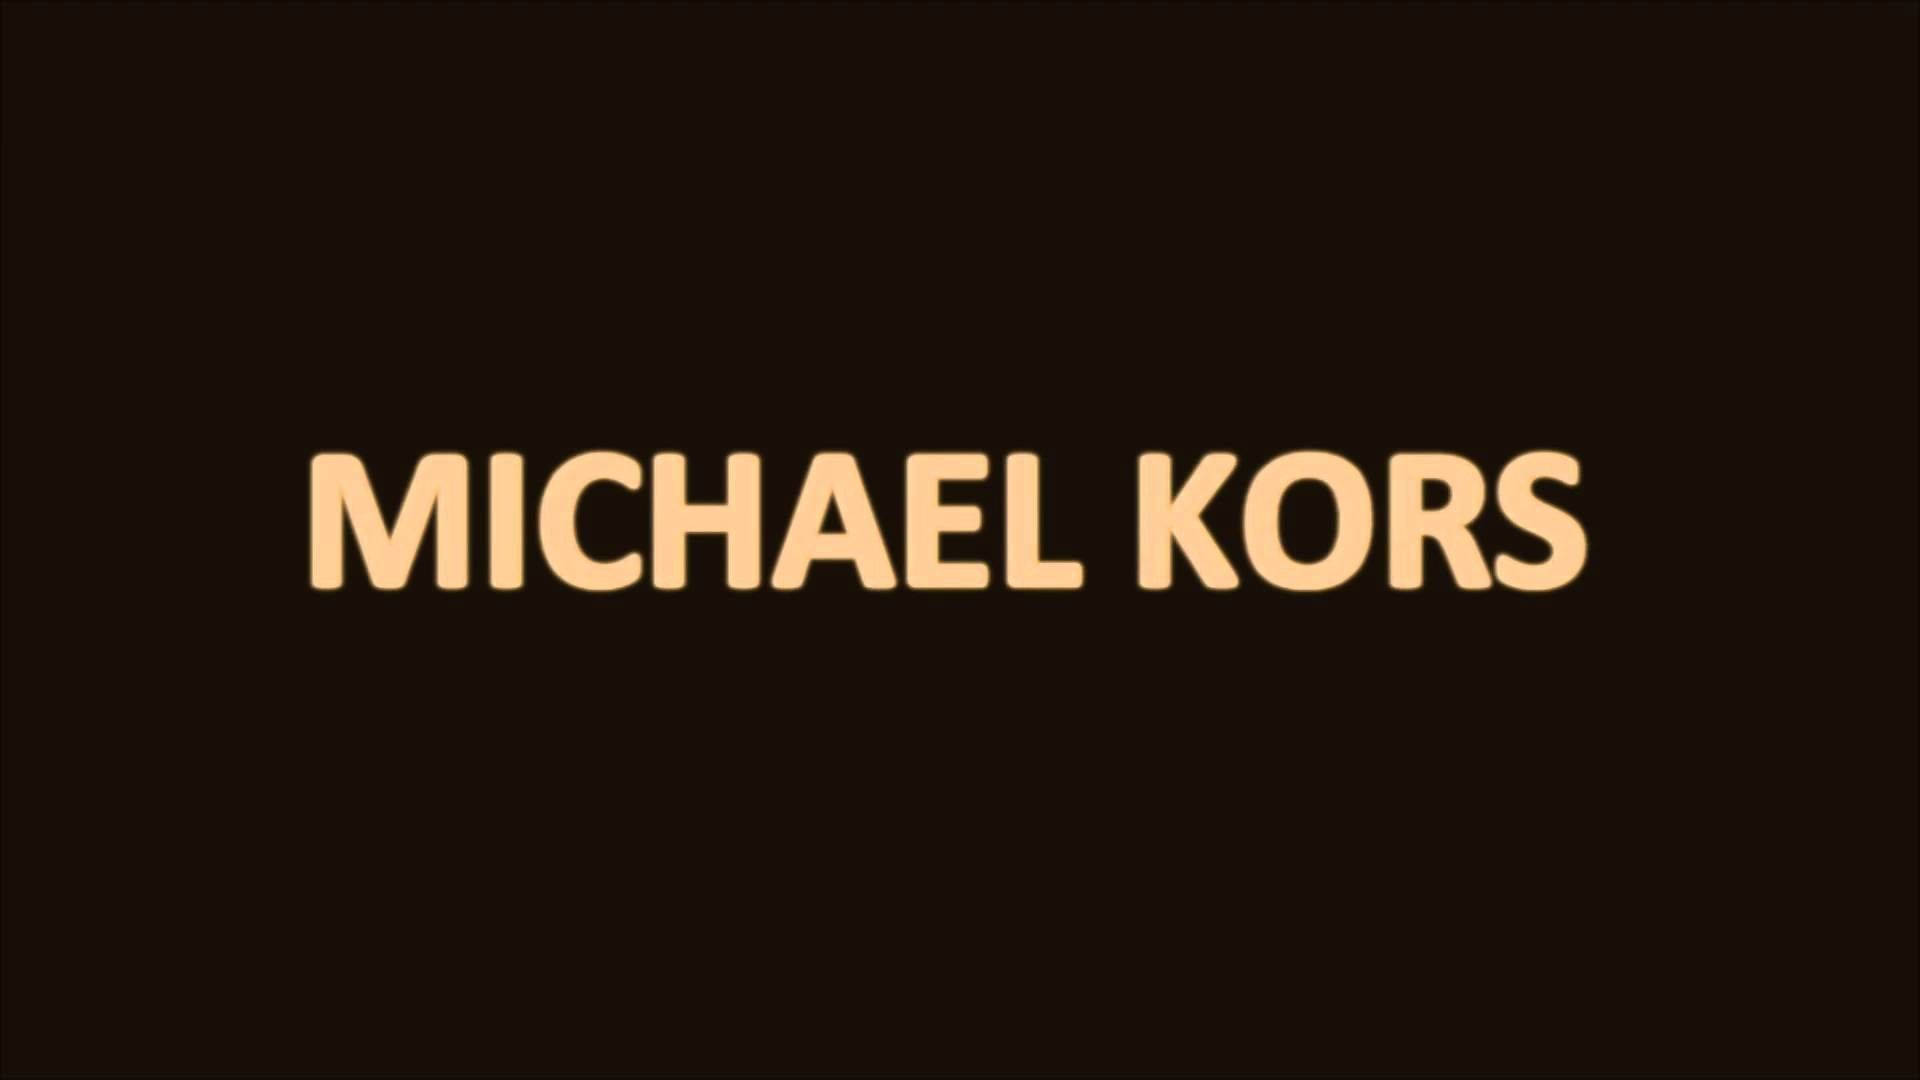 Michael Kors Pictures